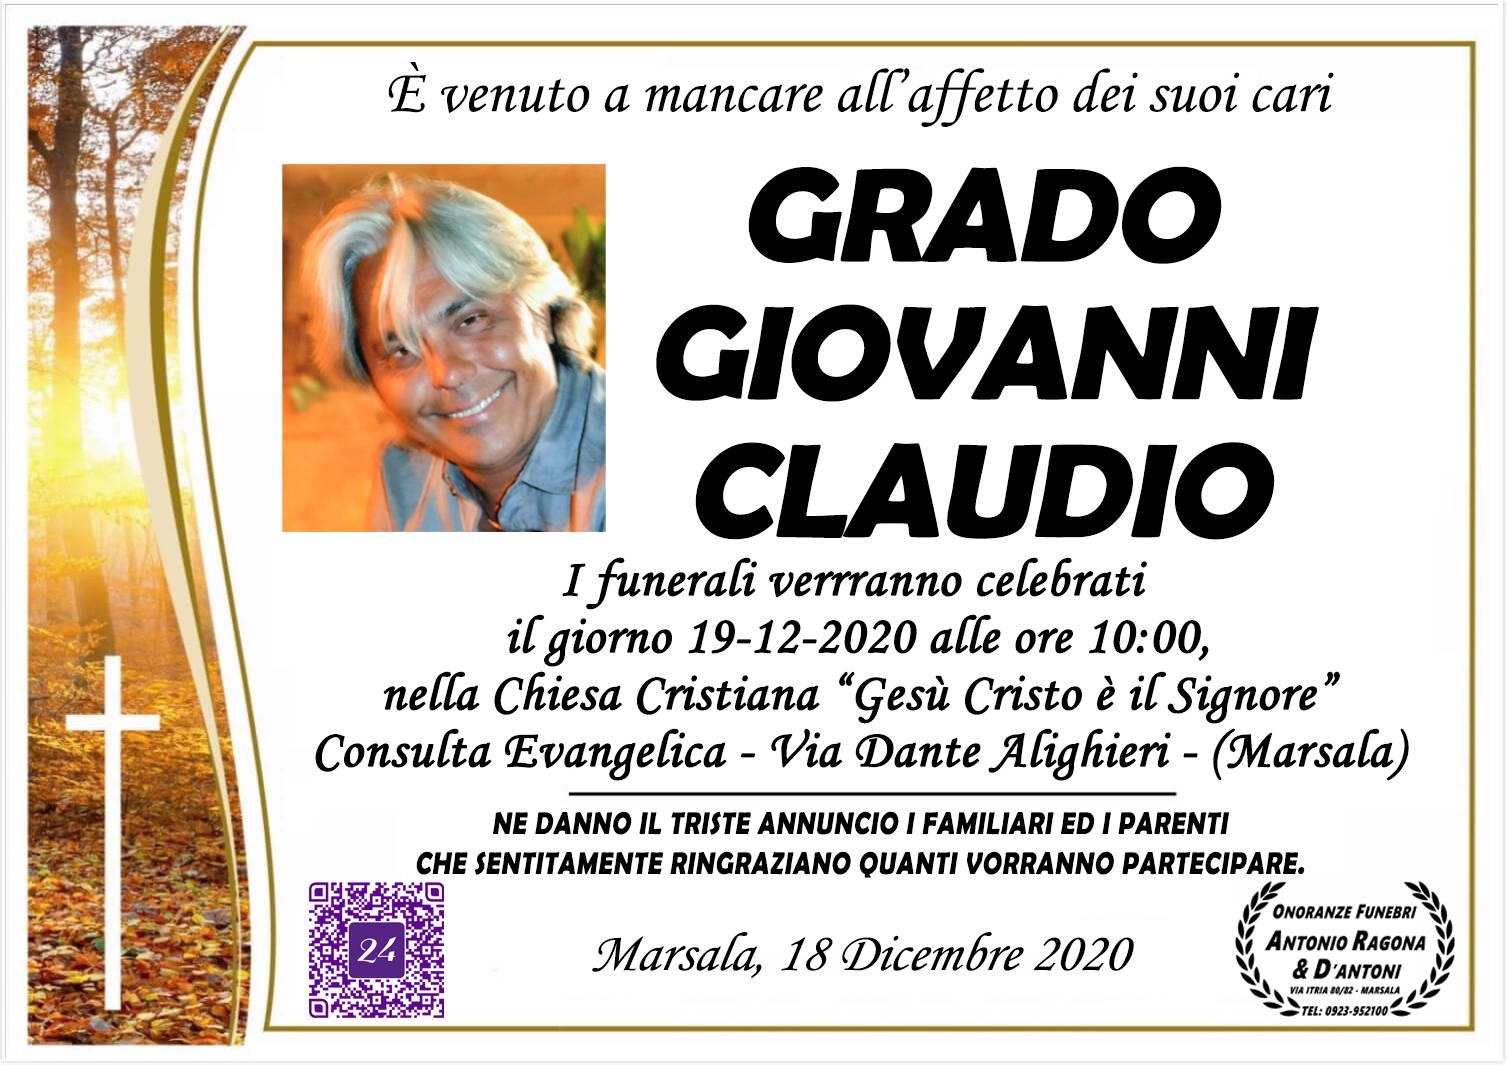 Giovanni Claudio Grado